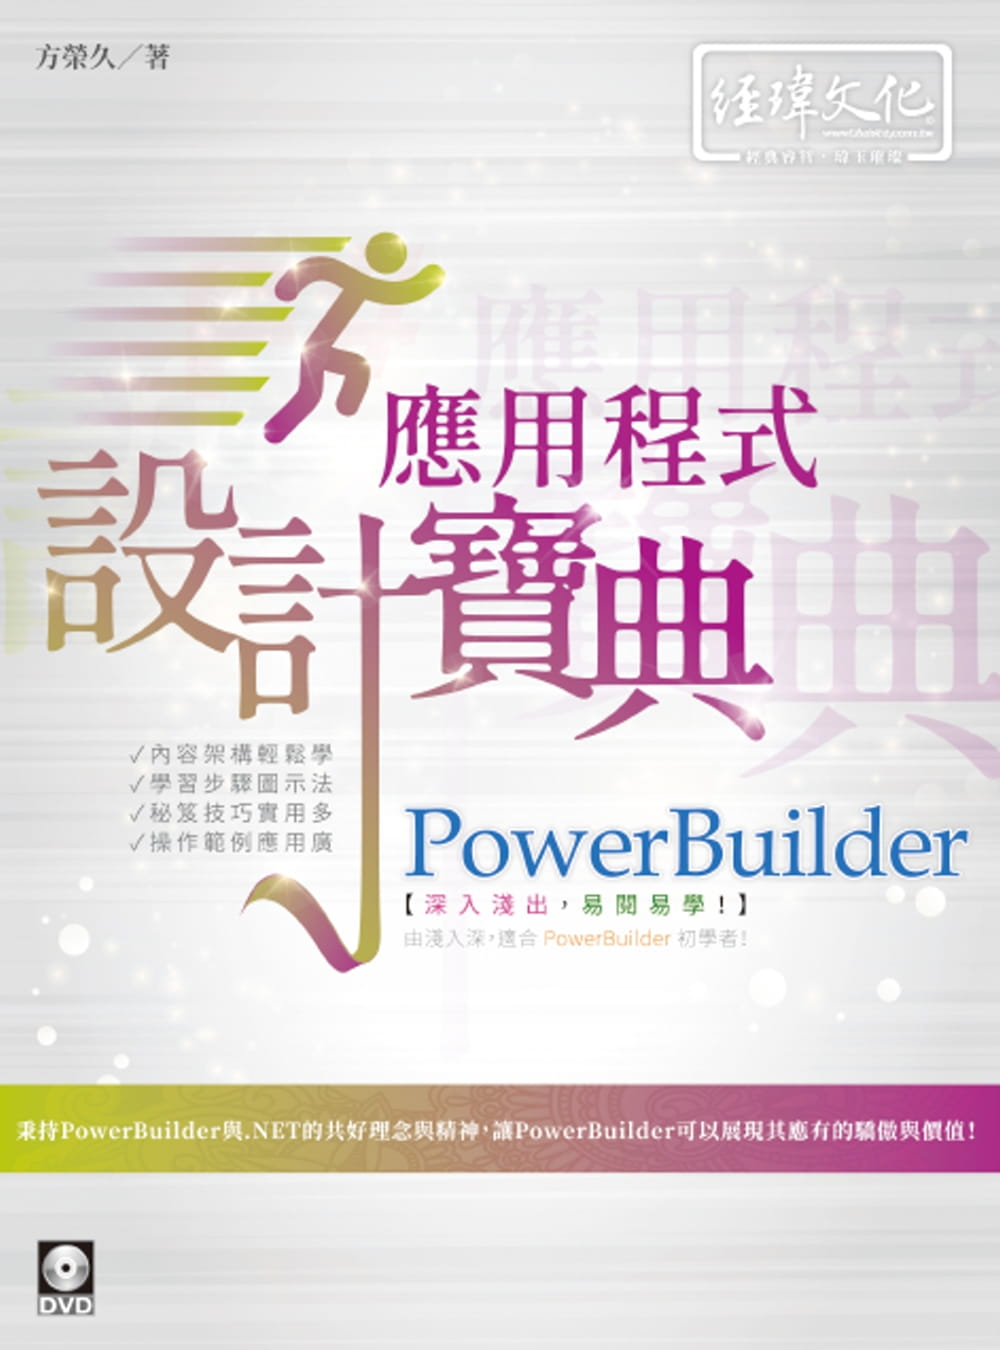 PowerBuilder